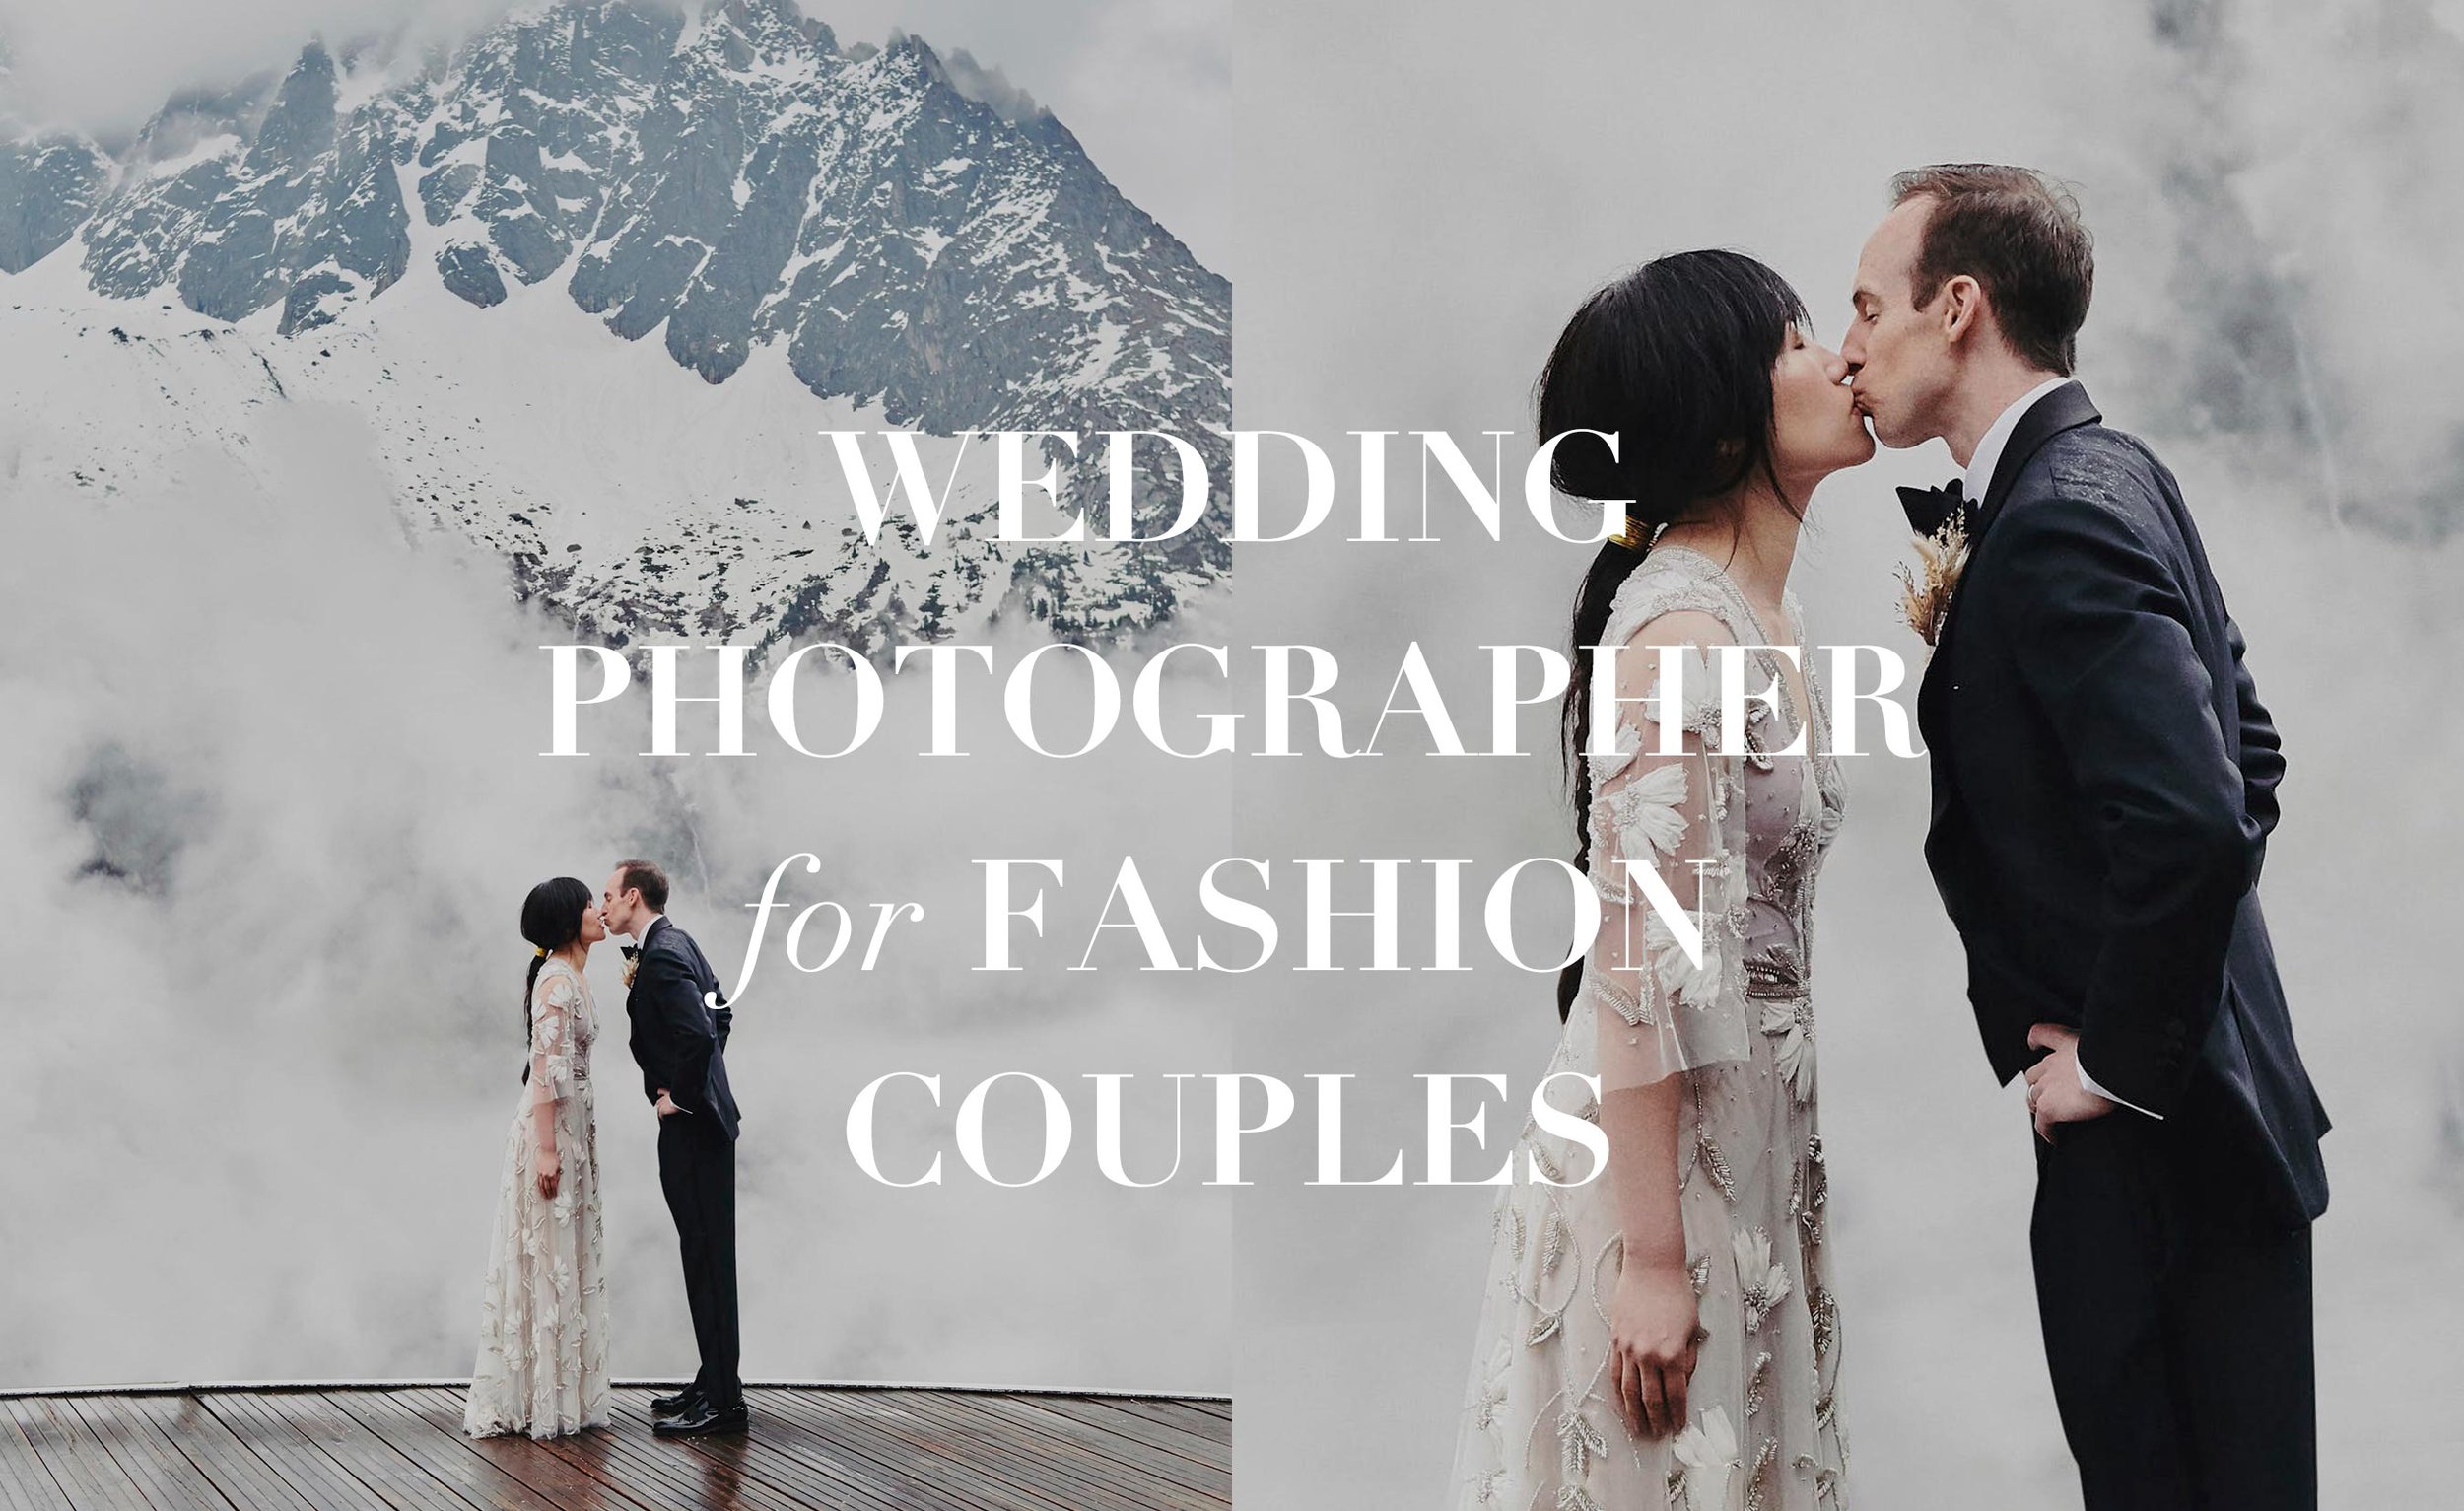 David_picchio_fashion_wedding_photographer_couple_paris_france_elopment_homepage_11.jpg